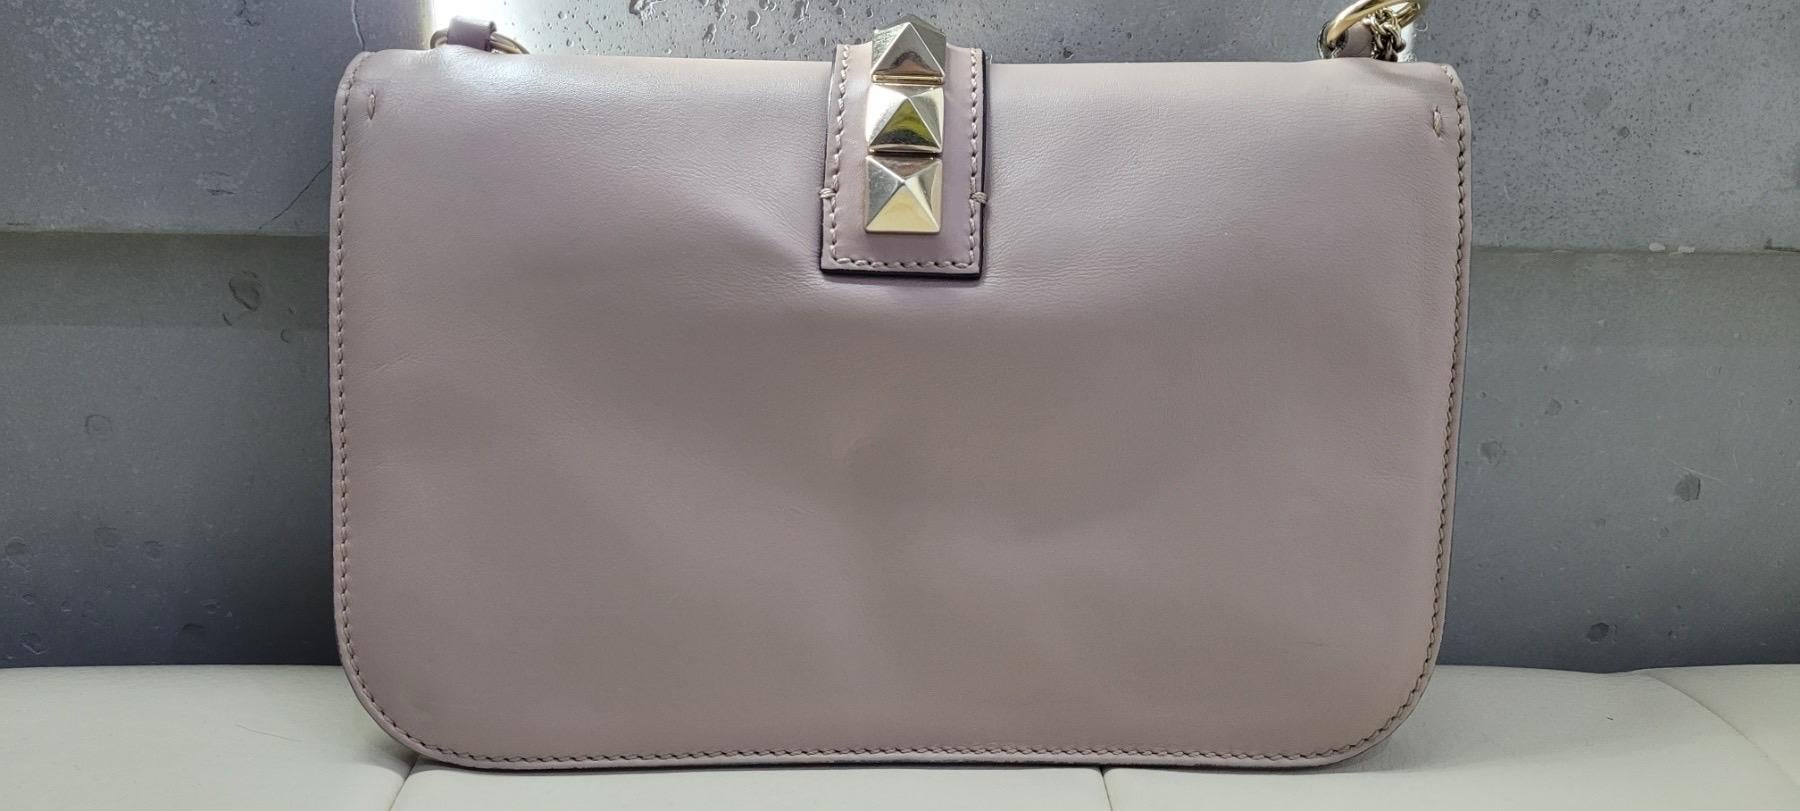 Valentino Poudre Rockstud Glam Medium Lock Shoulder Bag In Good Condition For Sale In Krakow, PL